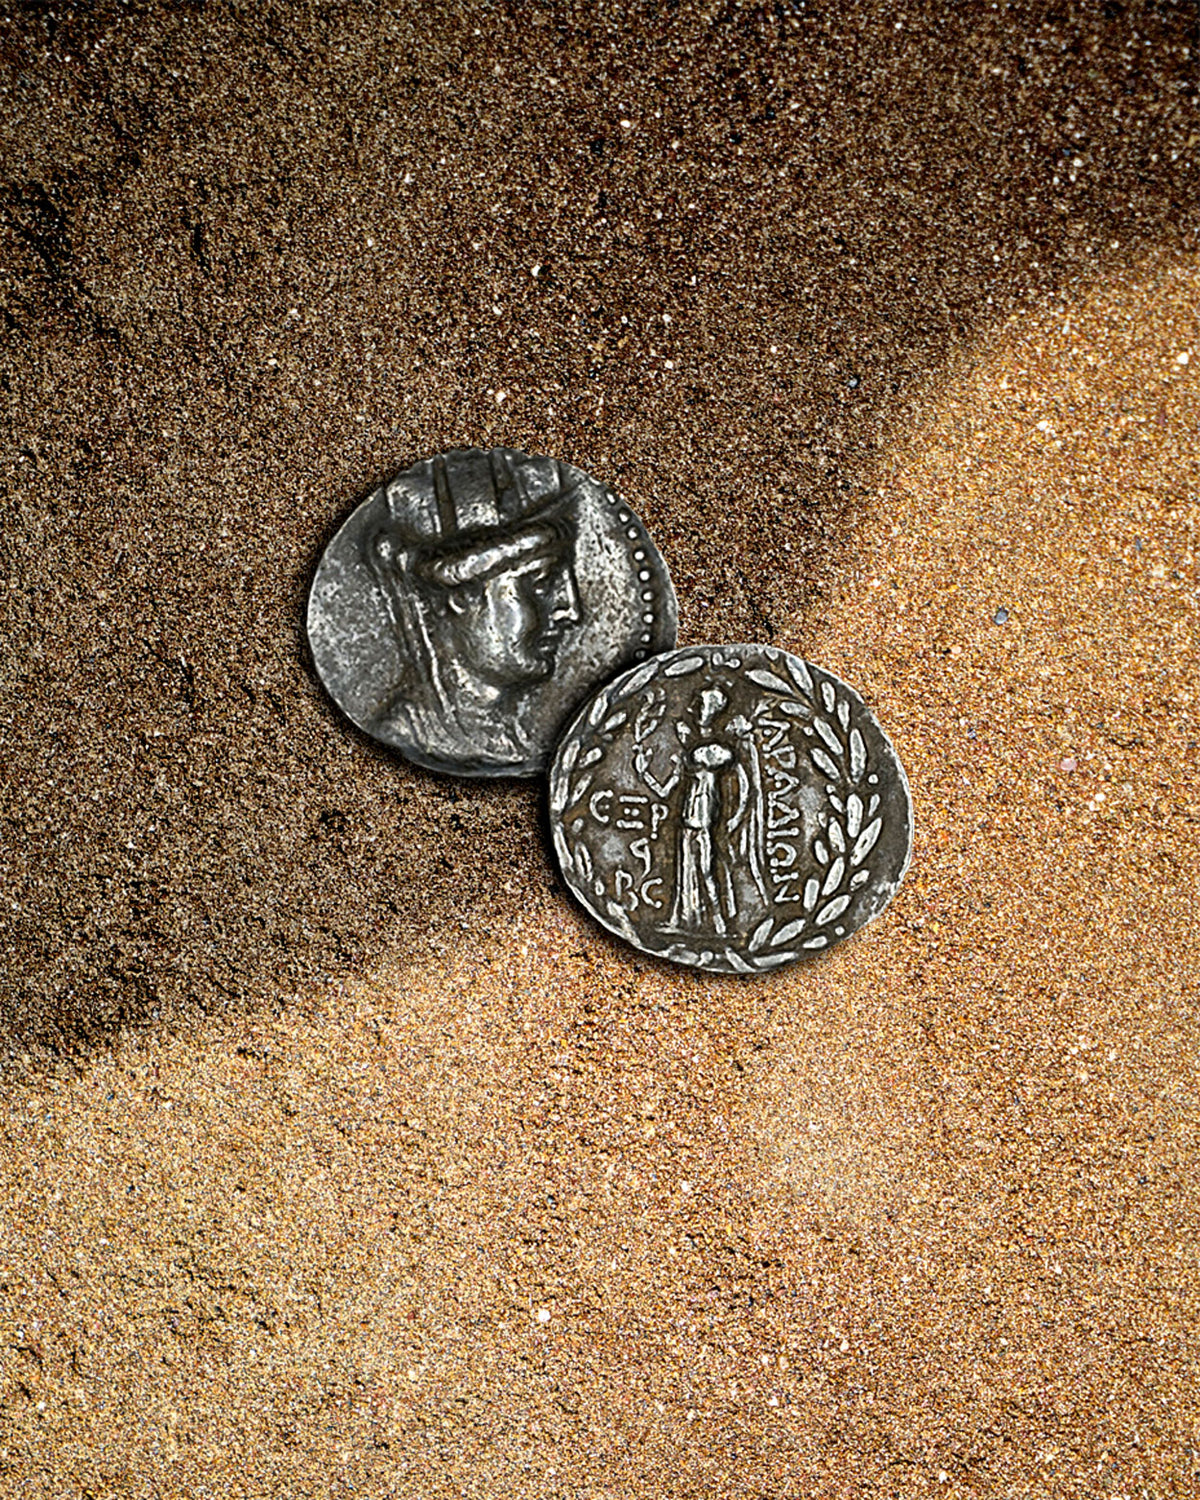 hellenistic tetradrachm, tyche, on sand